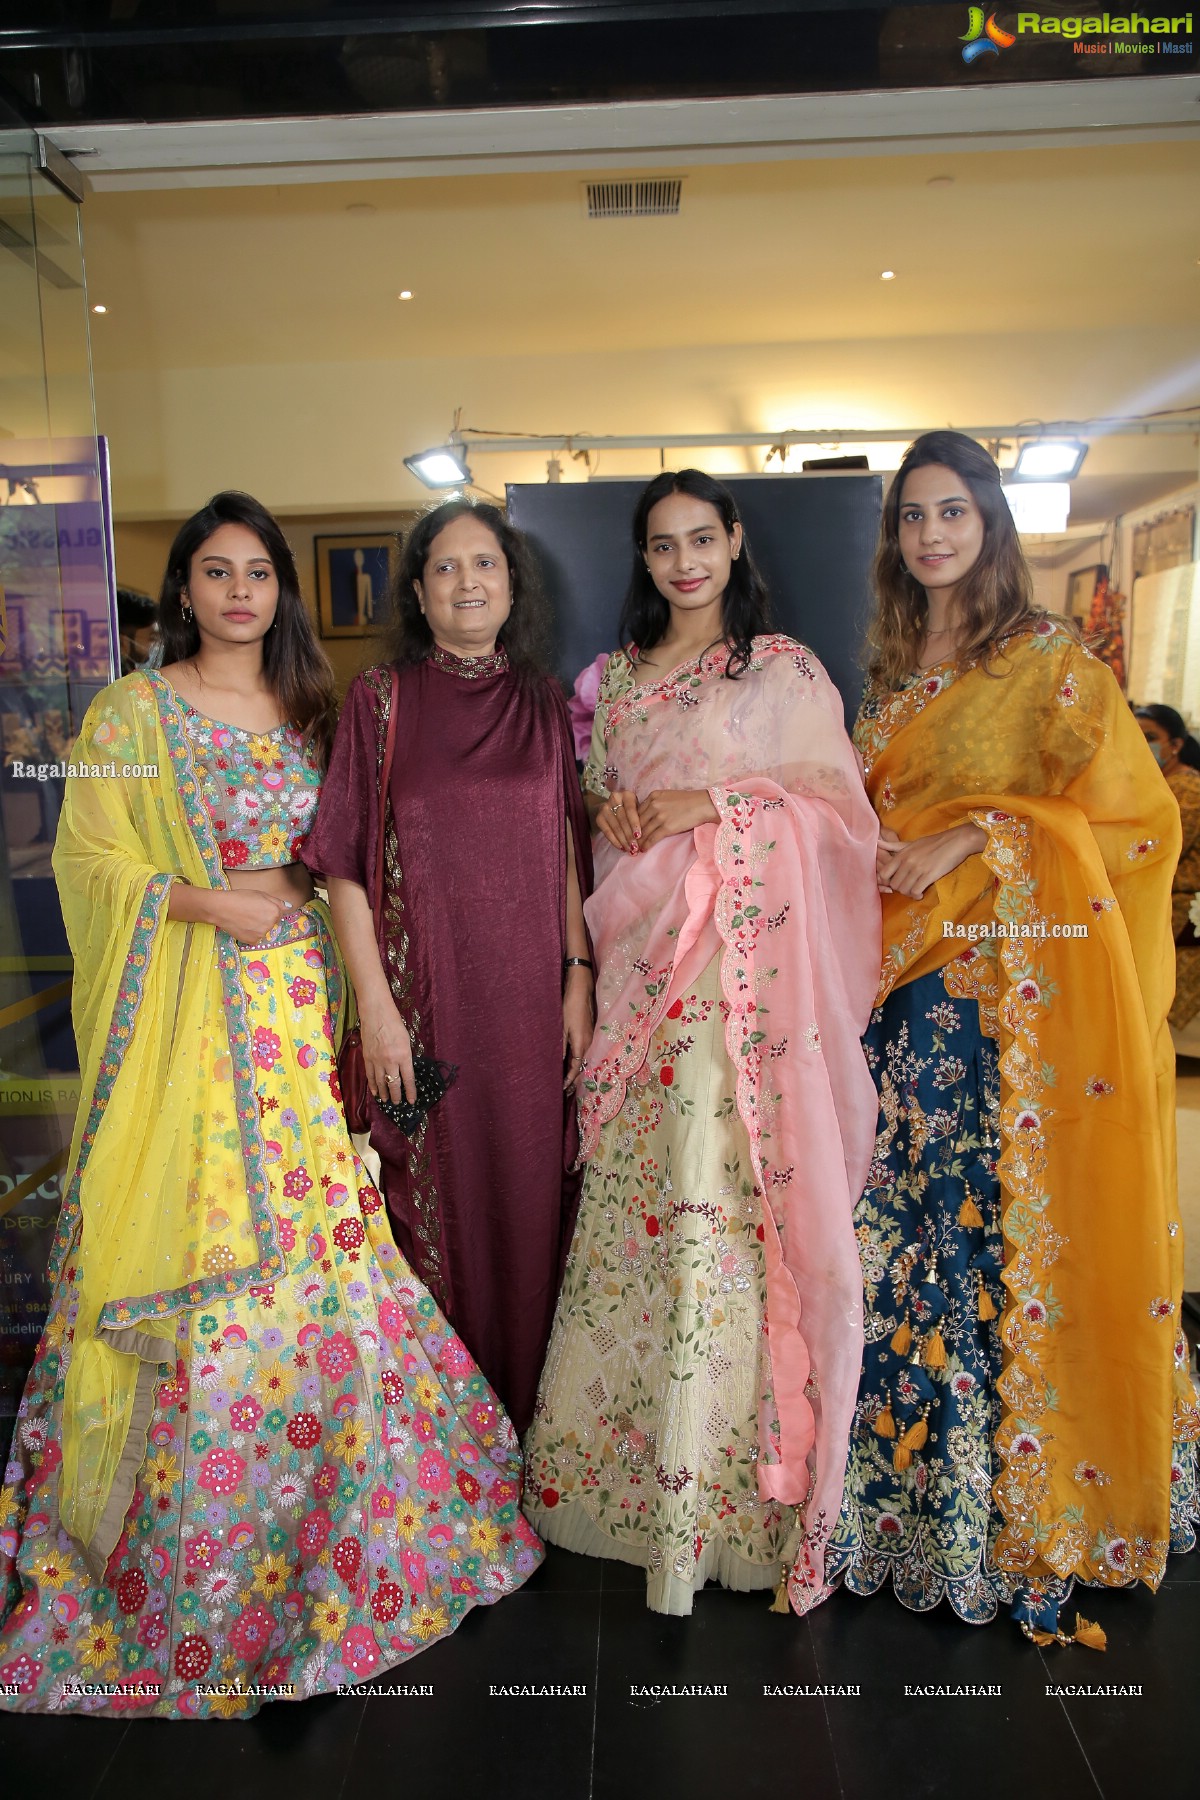 D'sire Designer Exhibition July 2021 Kicks Off at Taj Deccan, Hyderabad